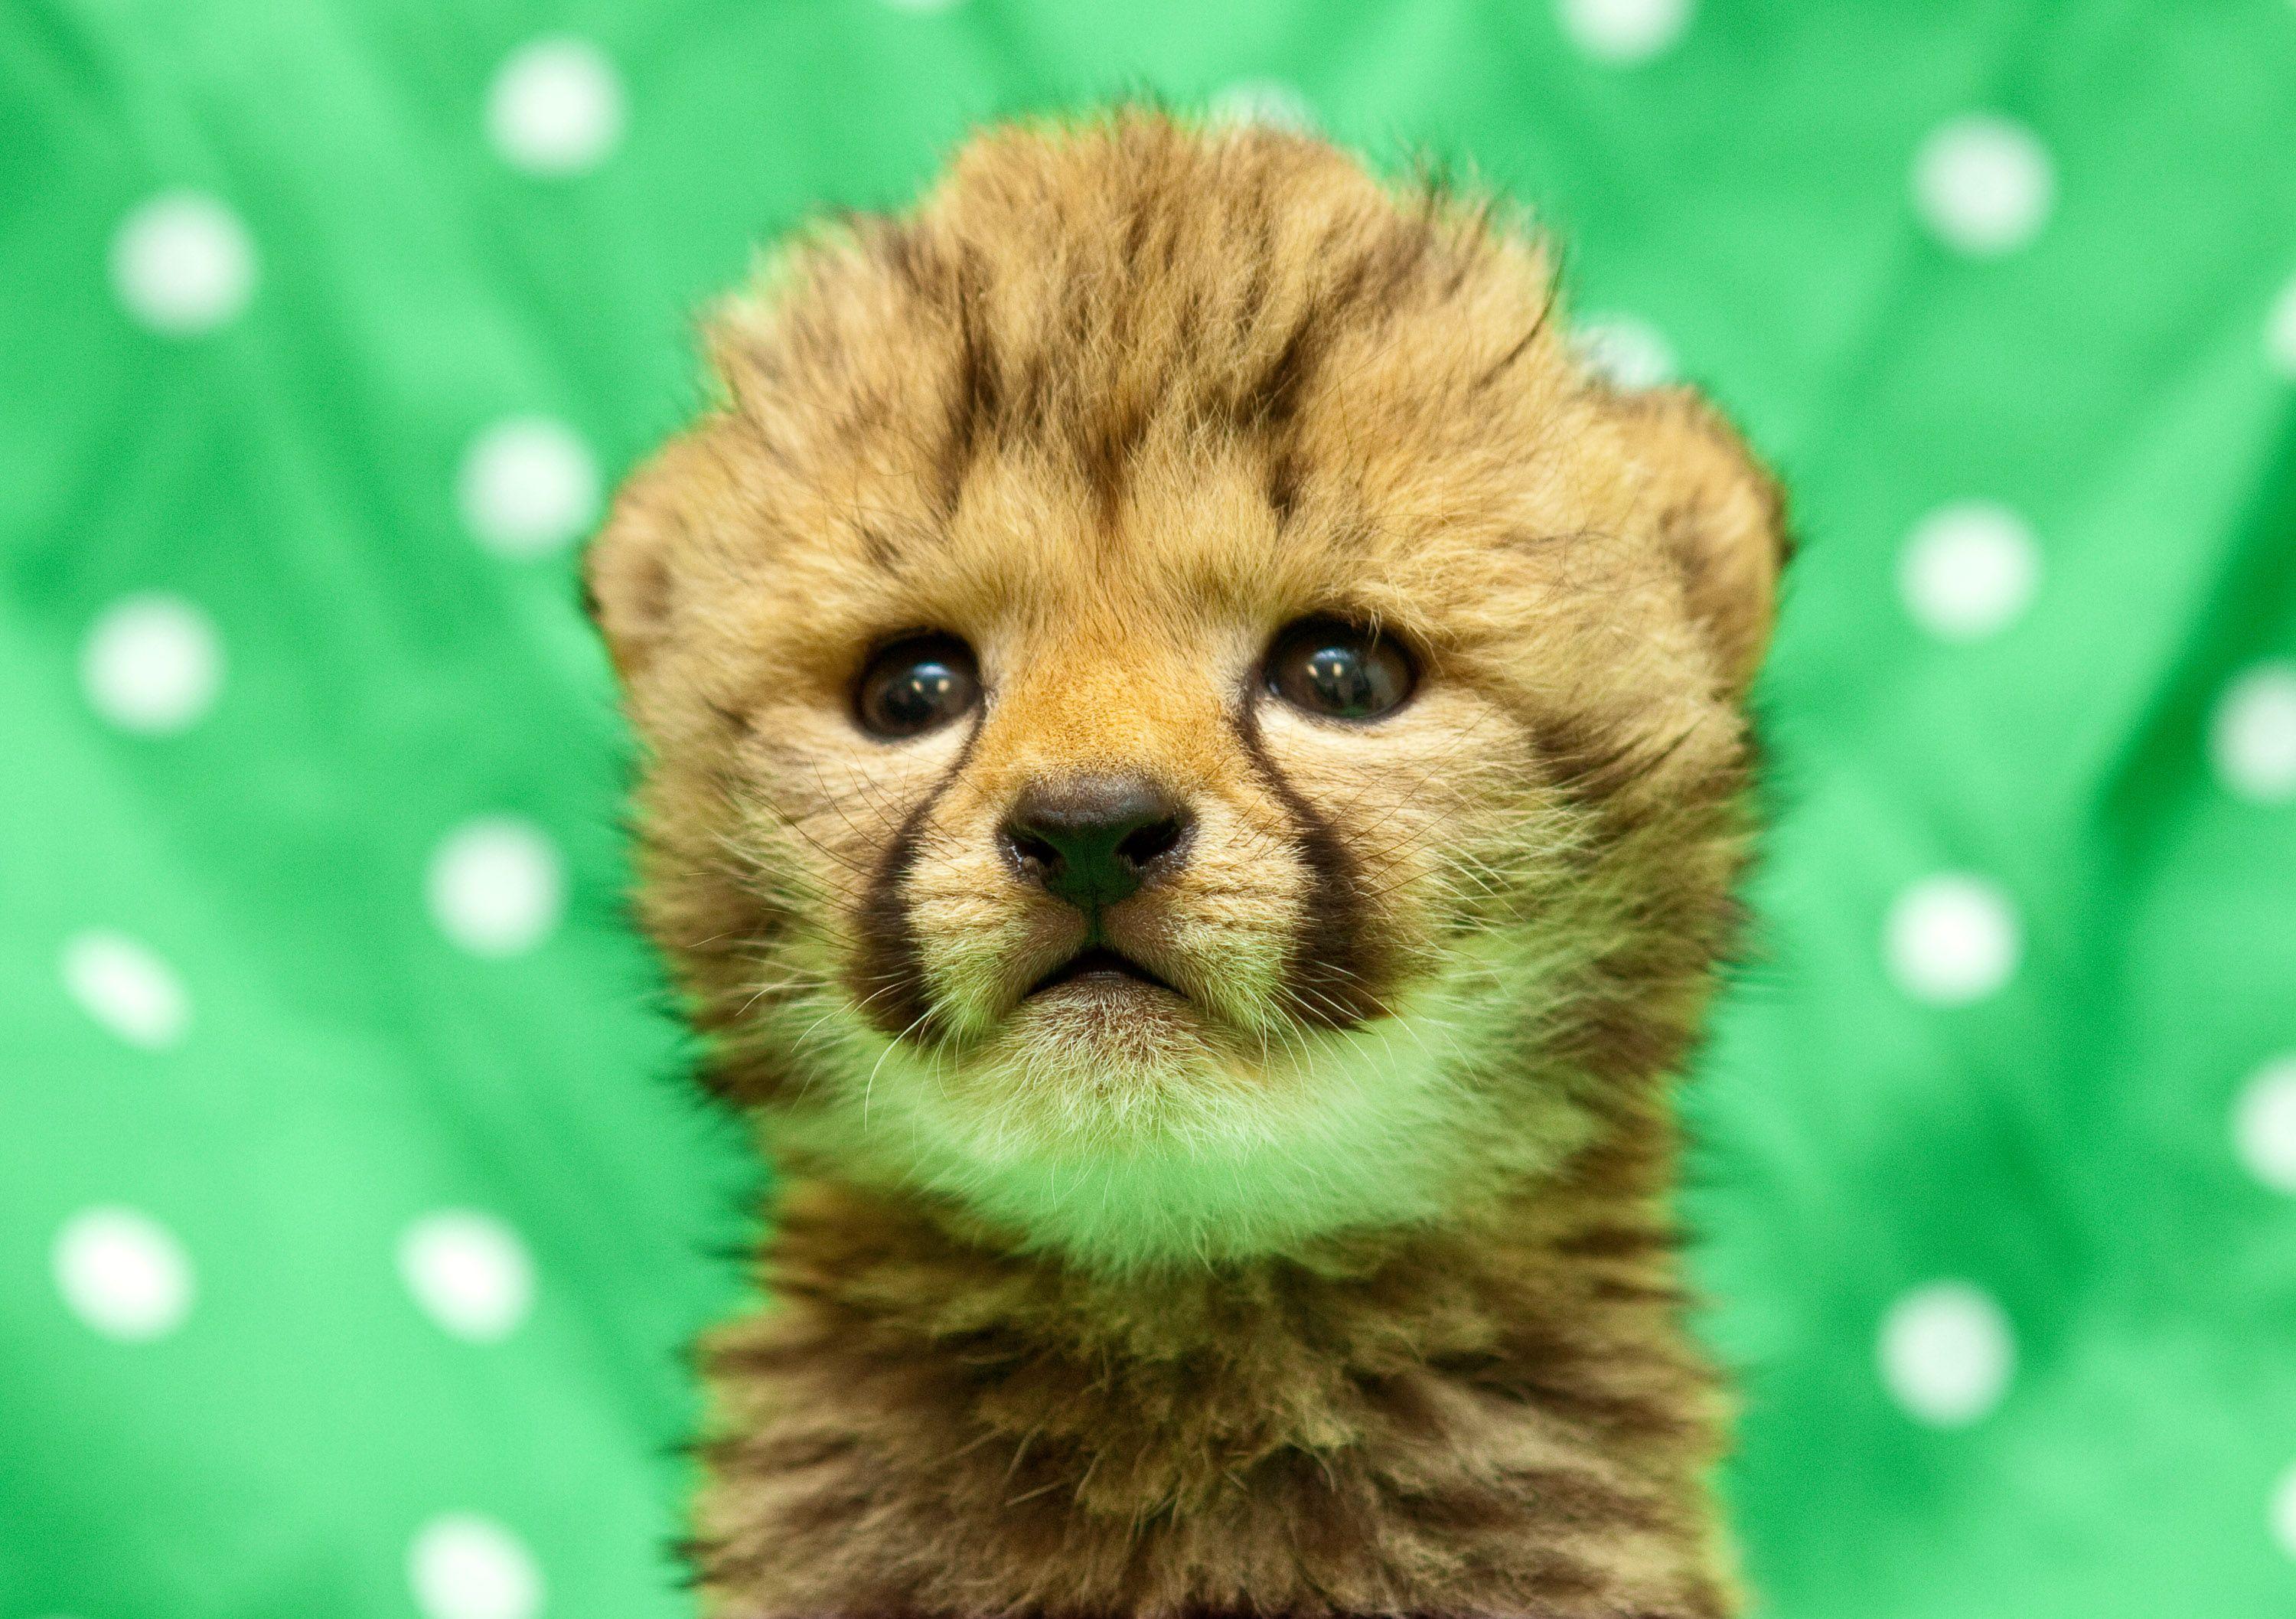 Wallpaper ID 381505  Animal Cheetah Phone Wallpaper Baby Animal Cub  1080x1920 free download